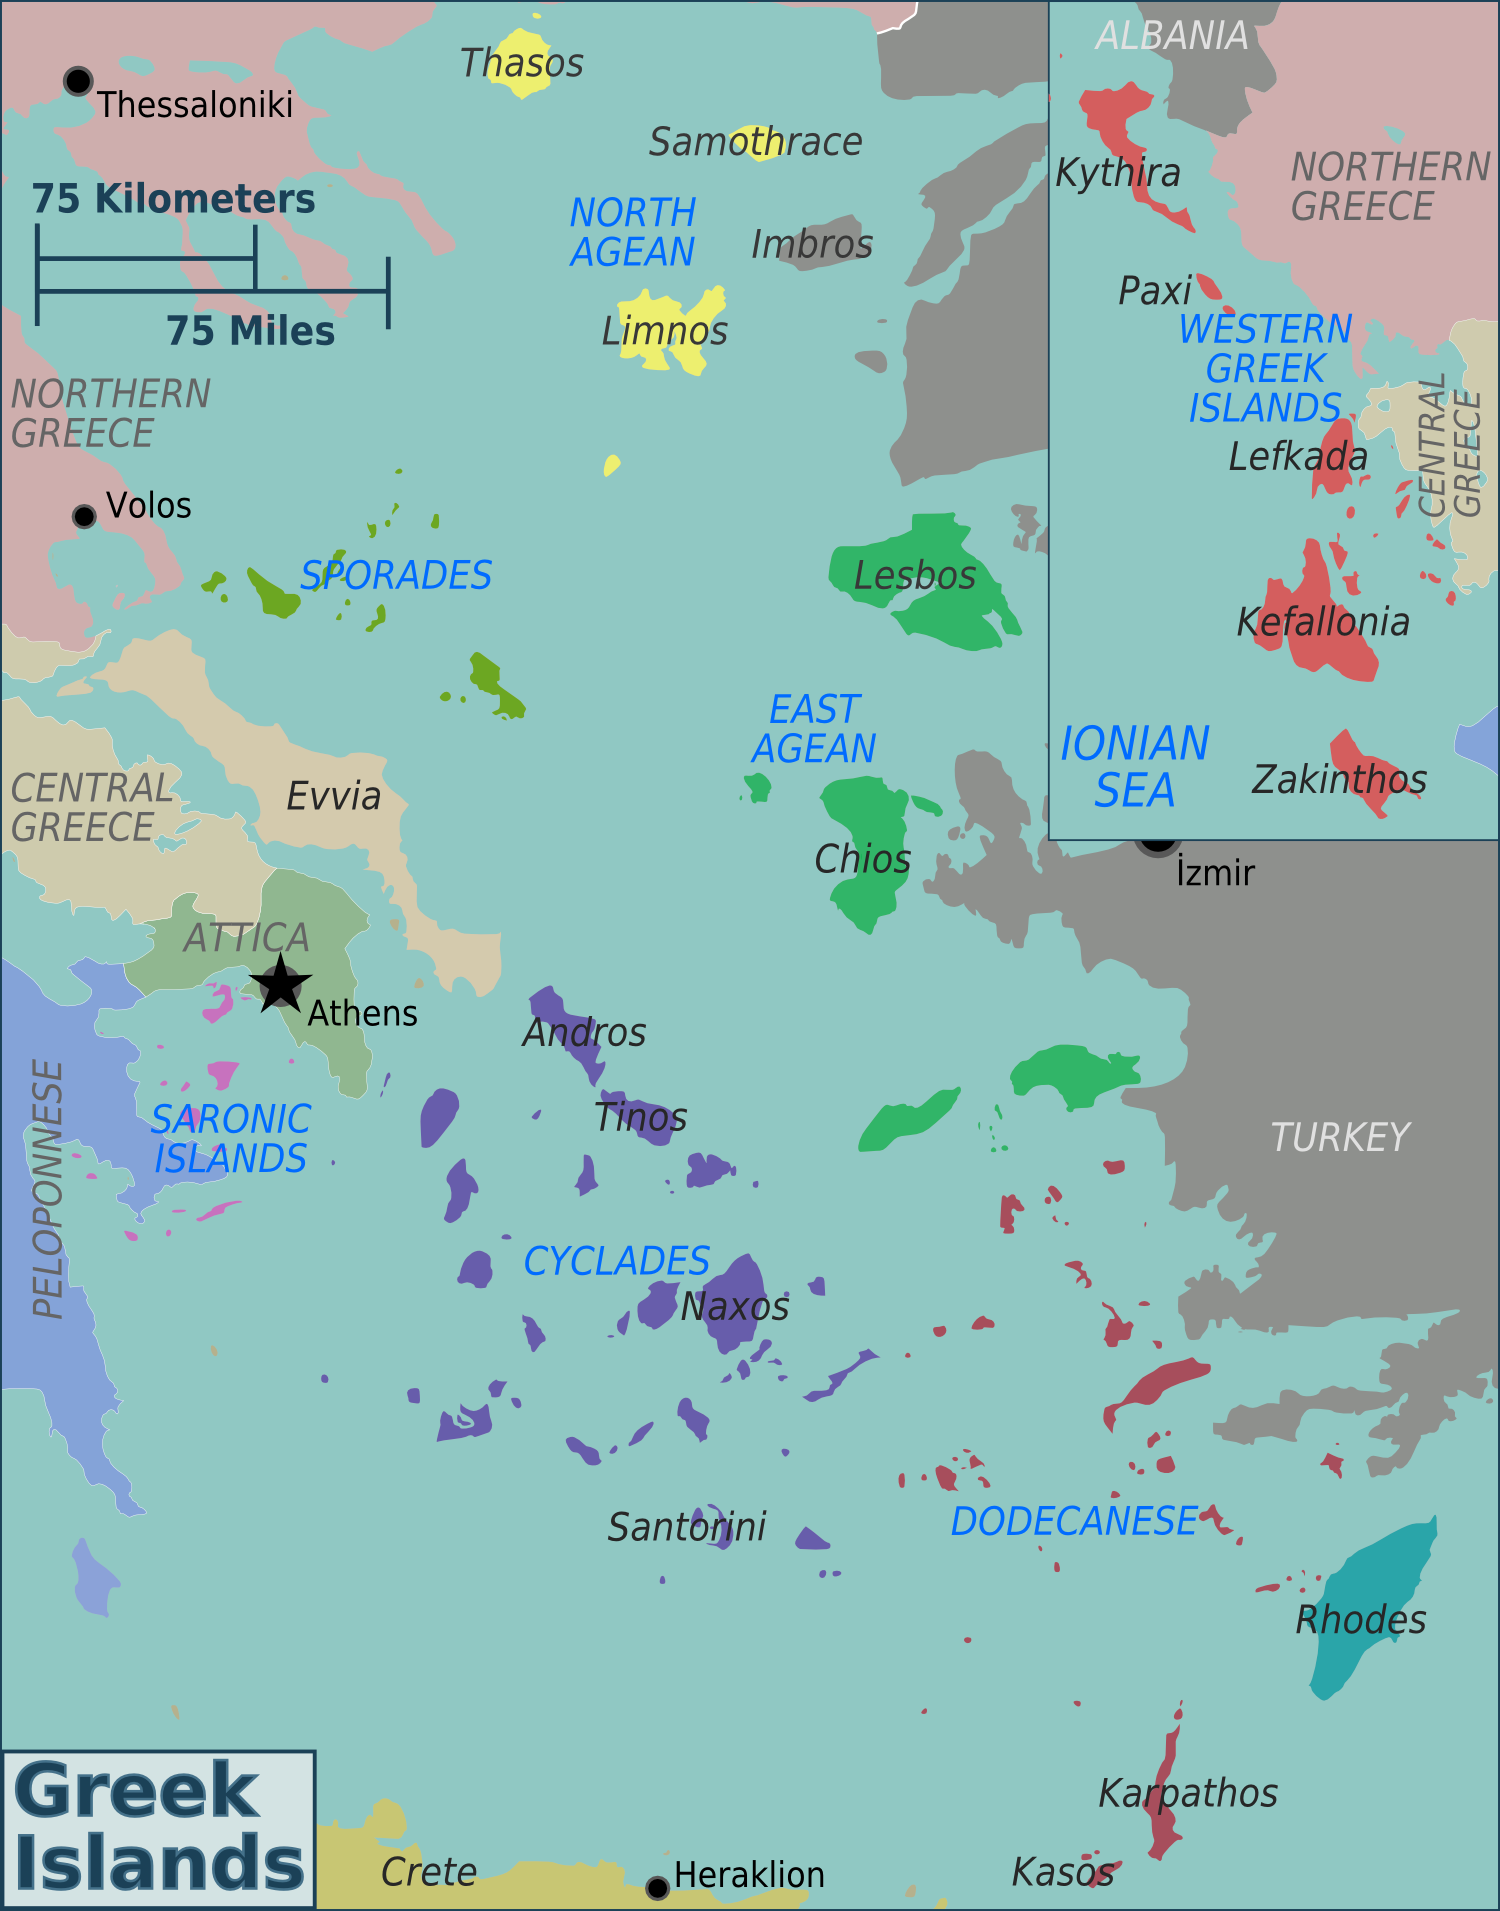 Greek Islands regions map.png